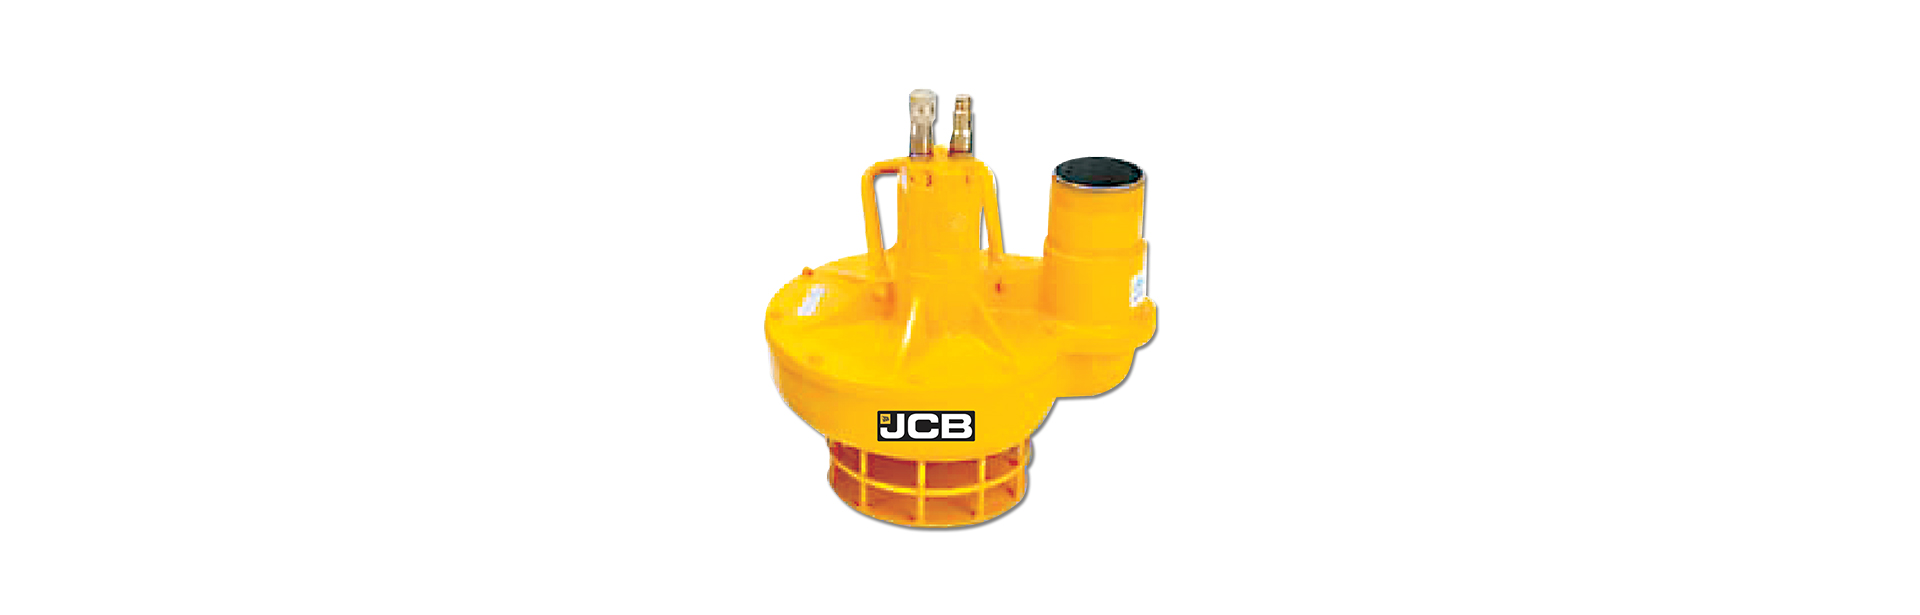 JCB Trash Pump Light Equipment Colombo